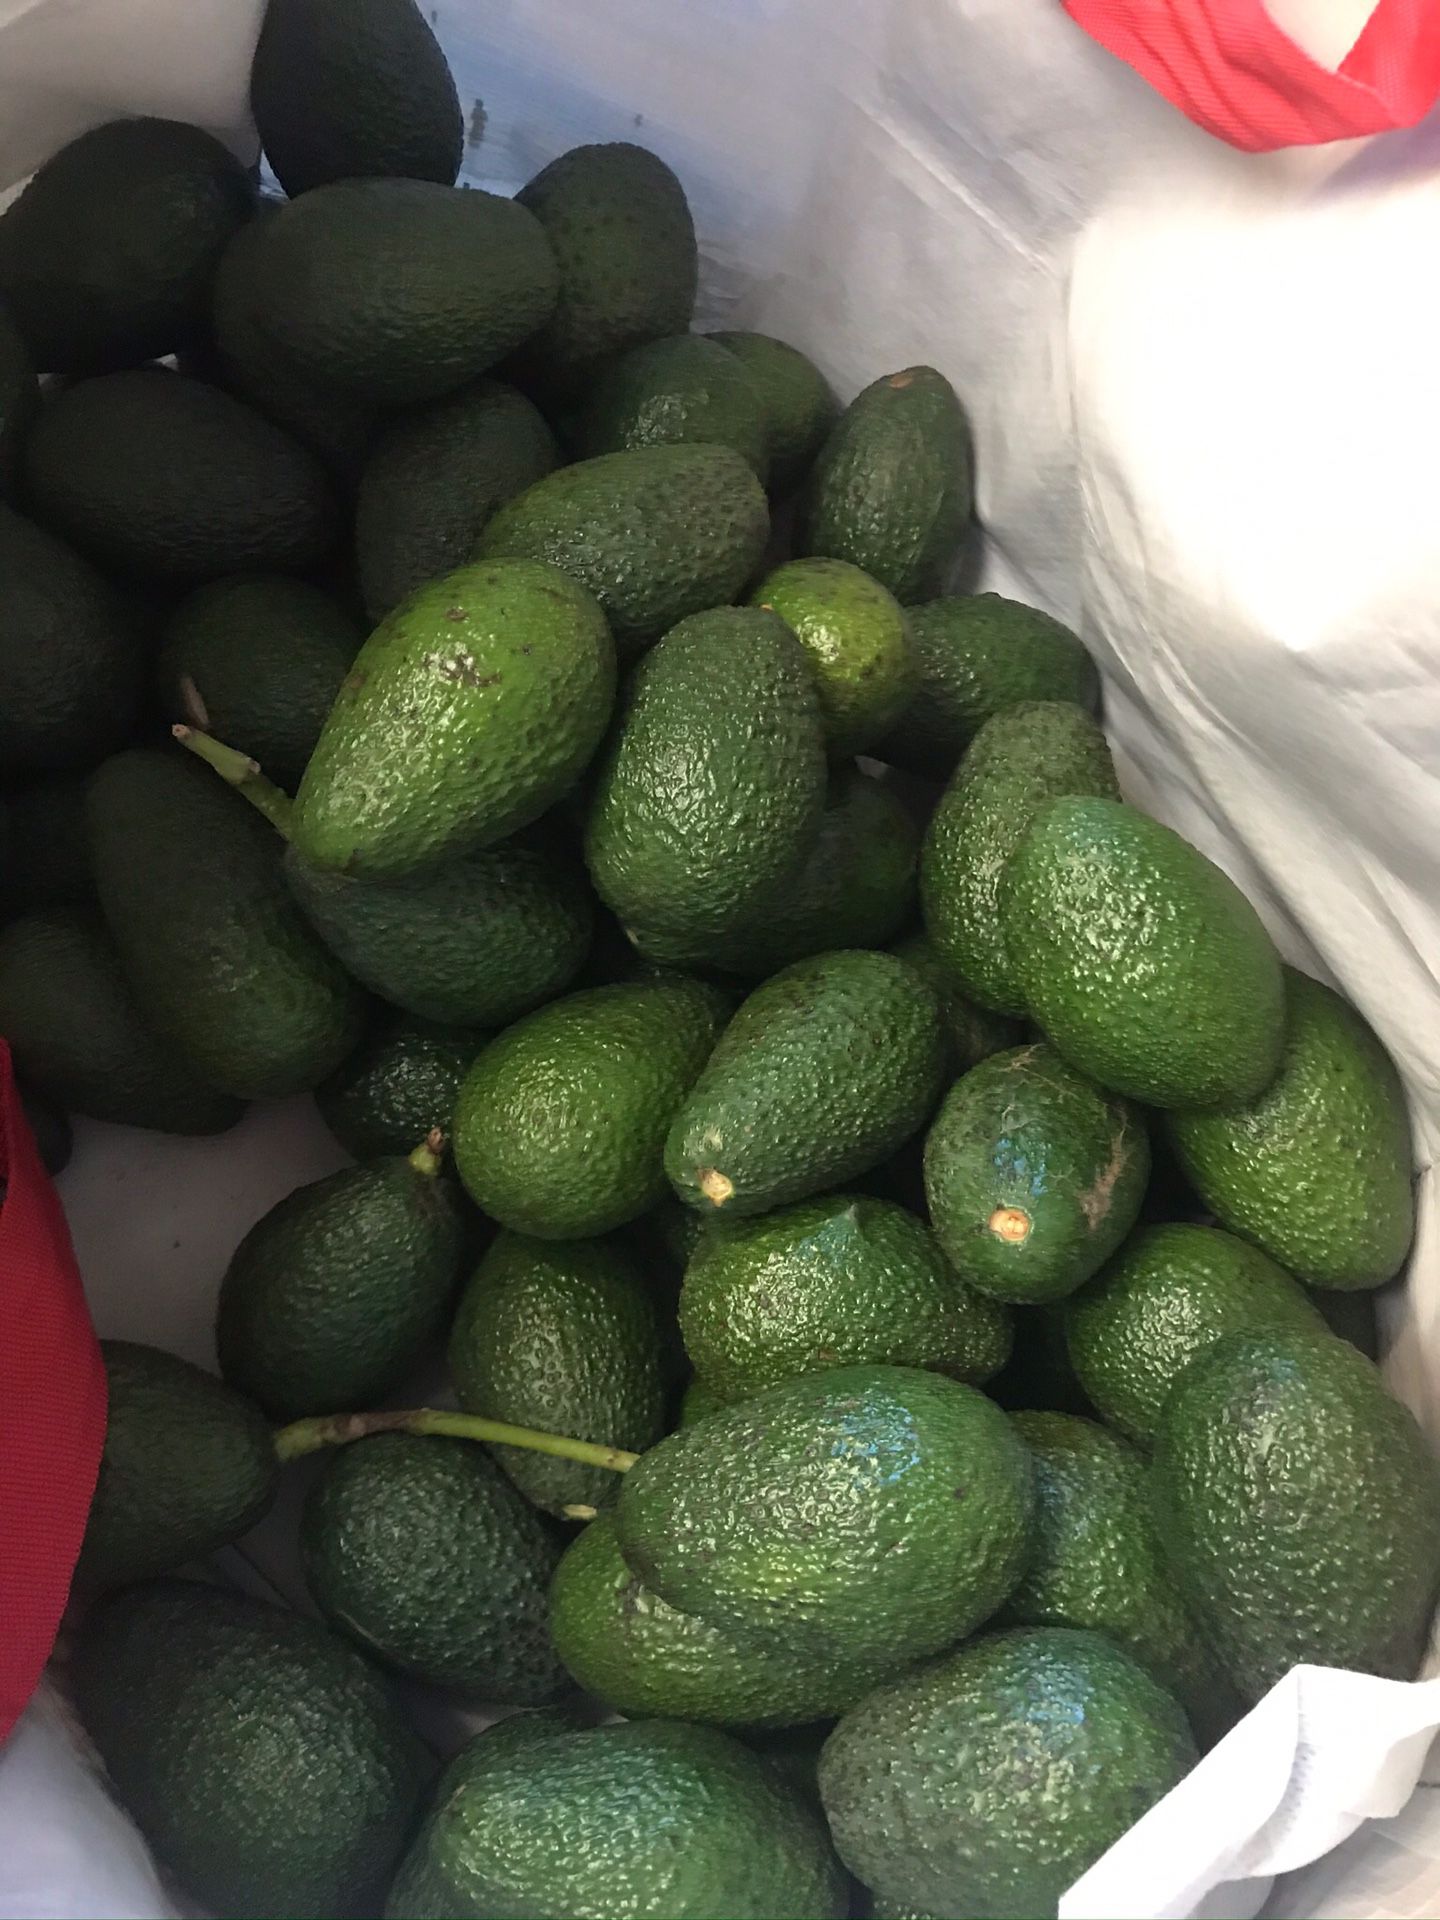 Organic avocados for Sale.